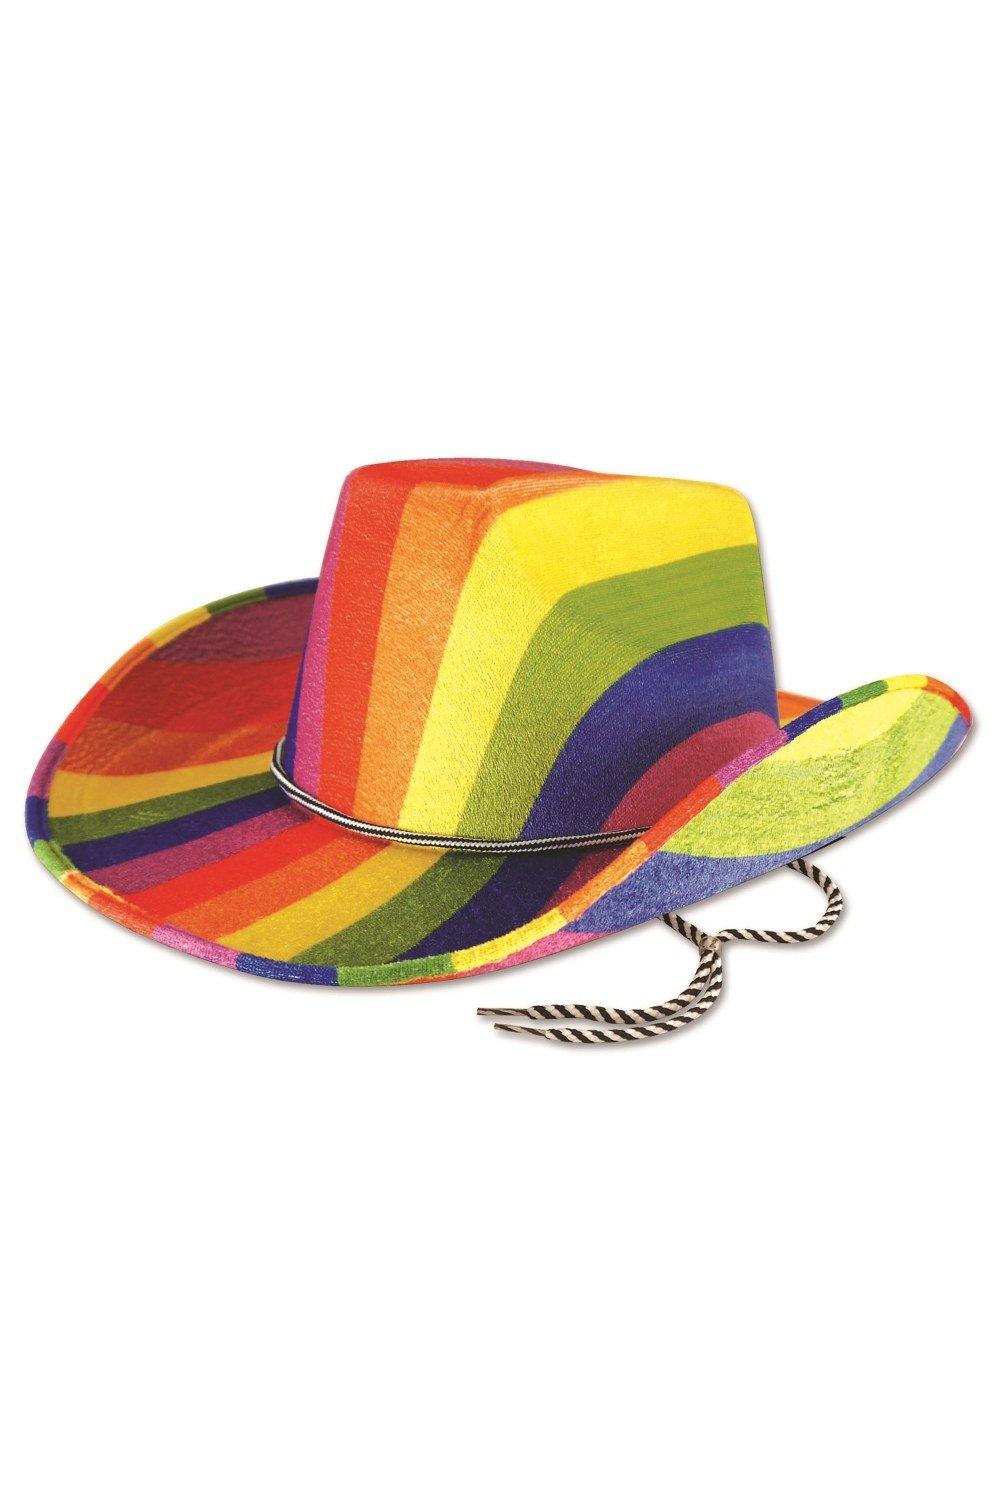 Радужная ковбойская шляпа Bristol Novelty, мультиколор